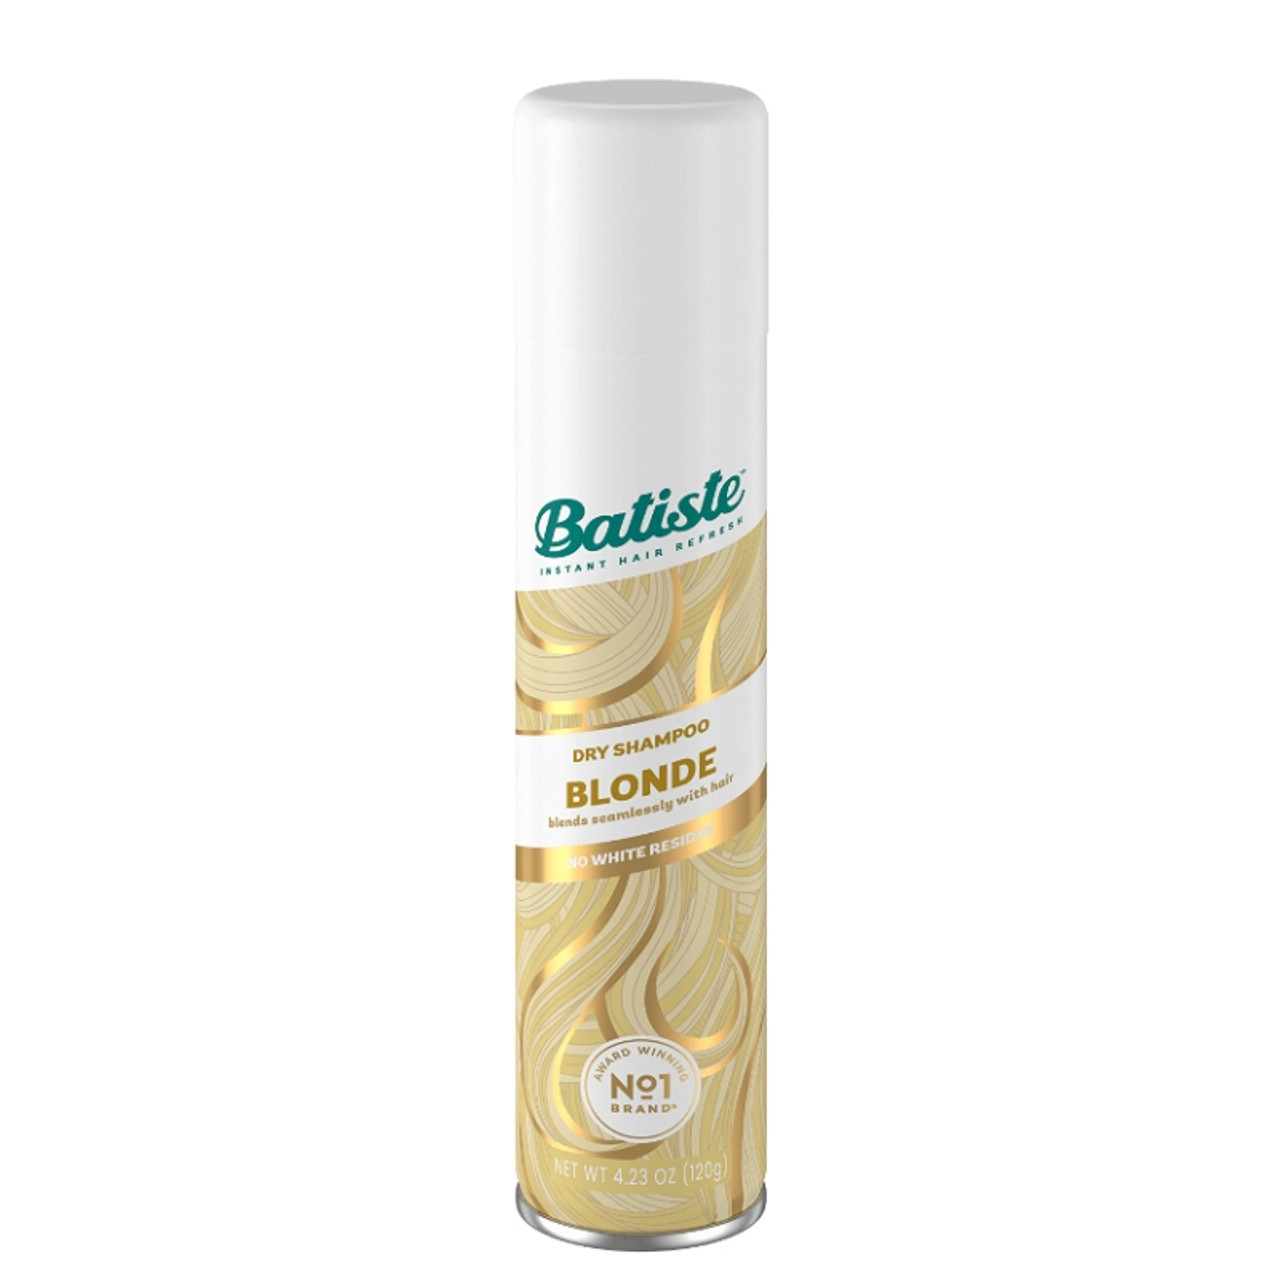 Batiste Dry Shampoo Light & Blonde : BeautyFeatures.ie